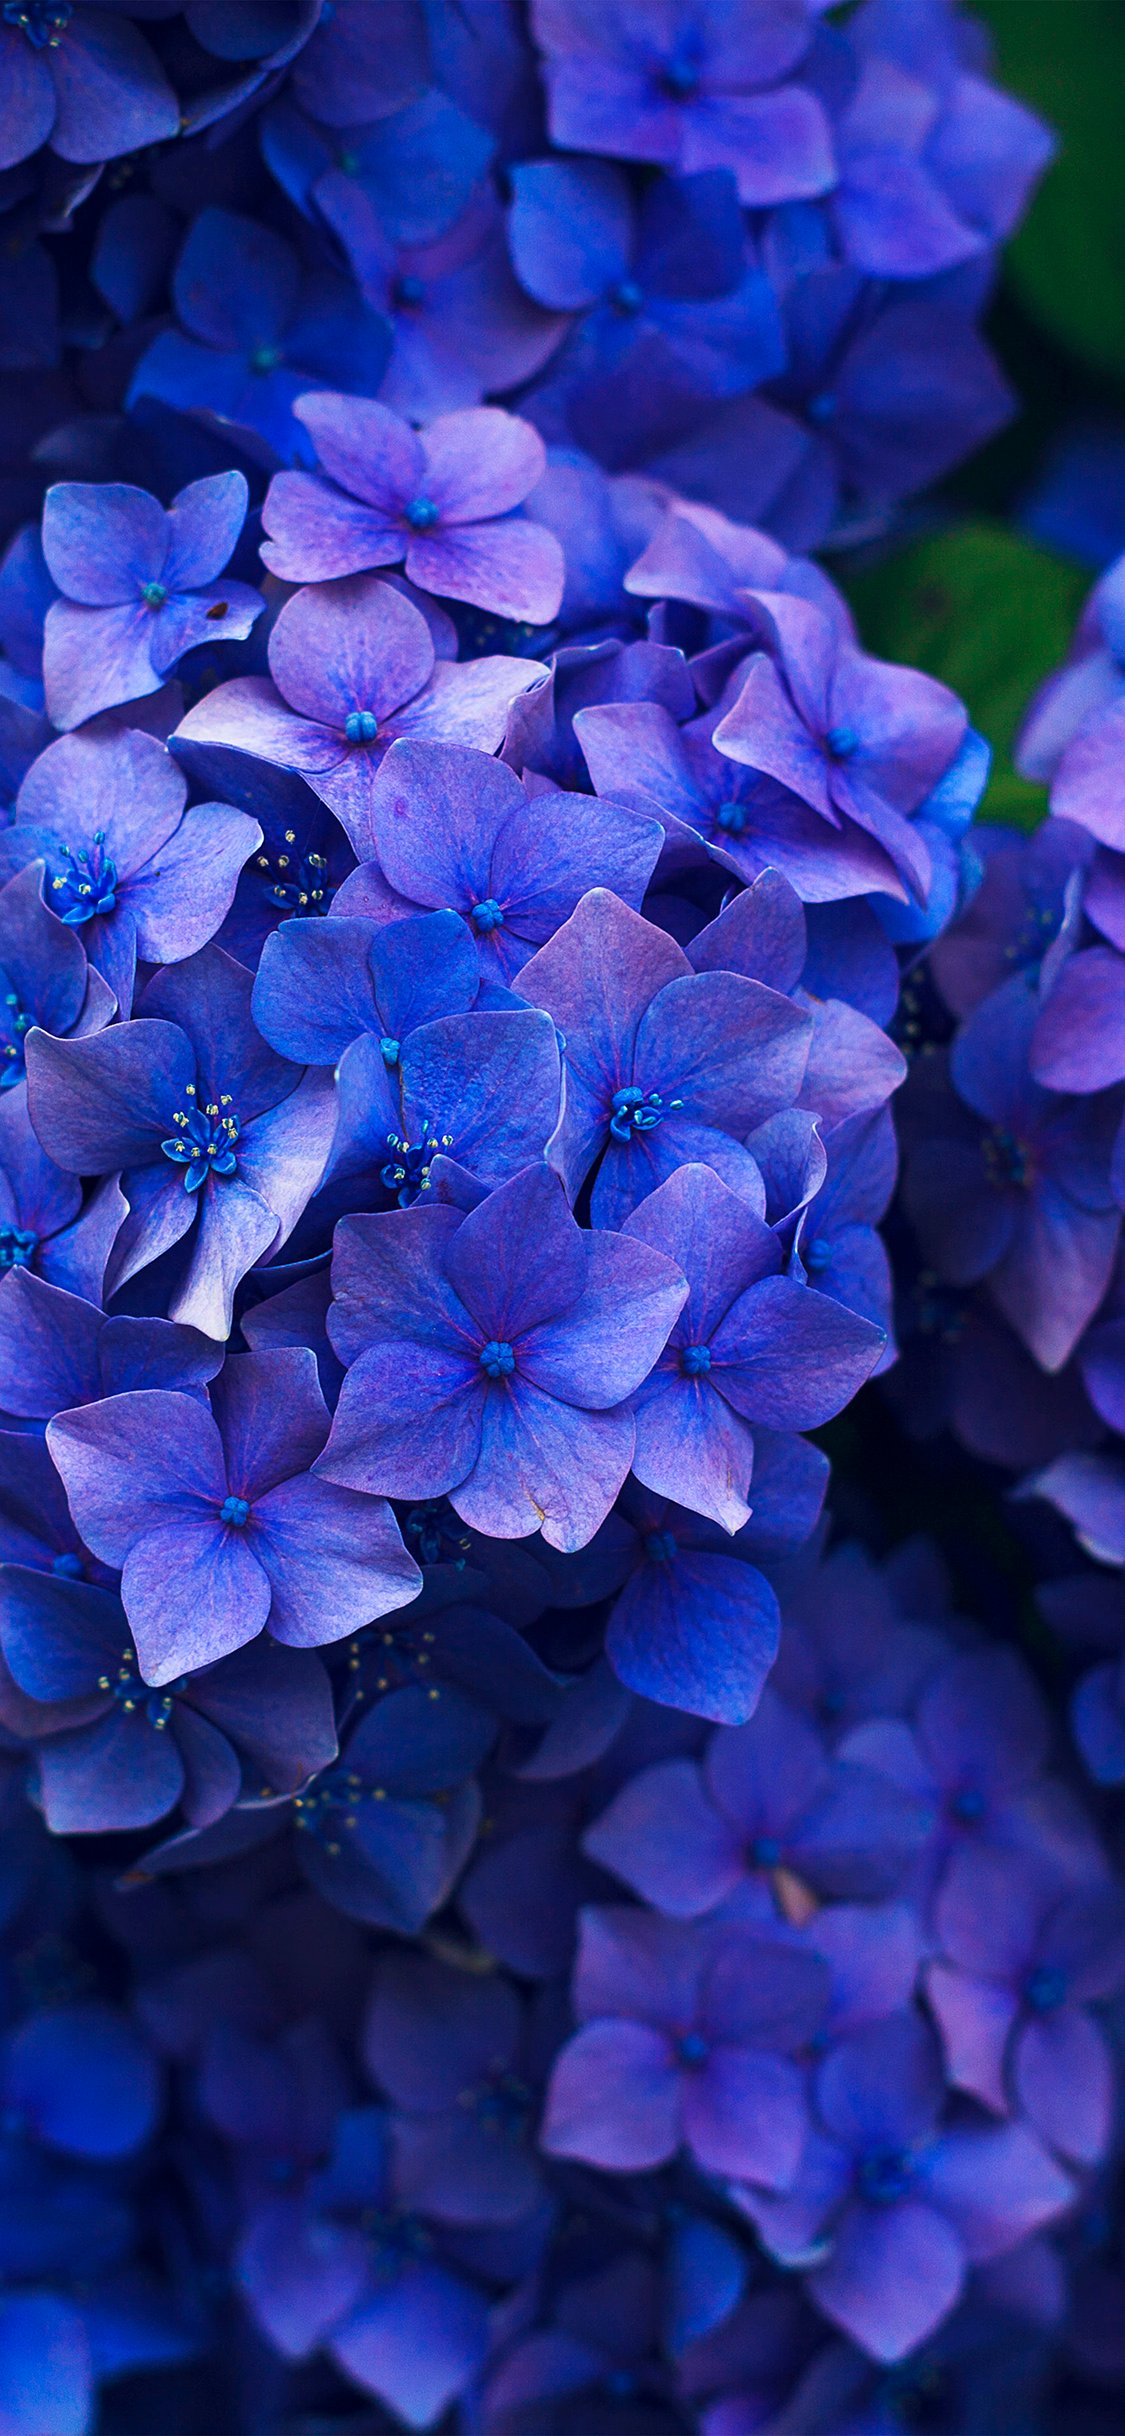 iPhone X wallpaper. flower spring blue purple nature